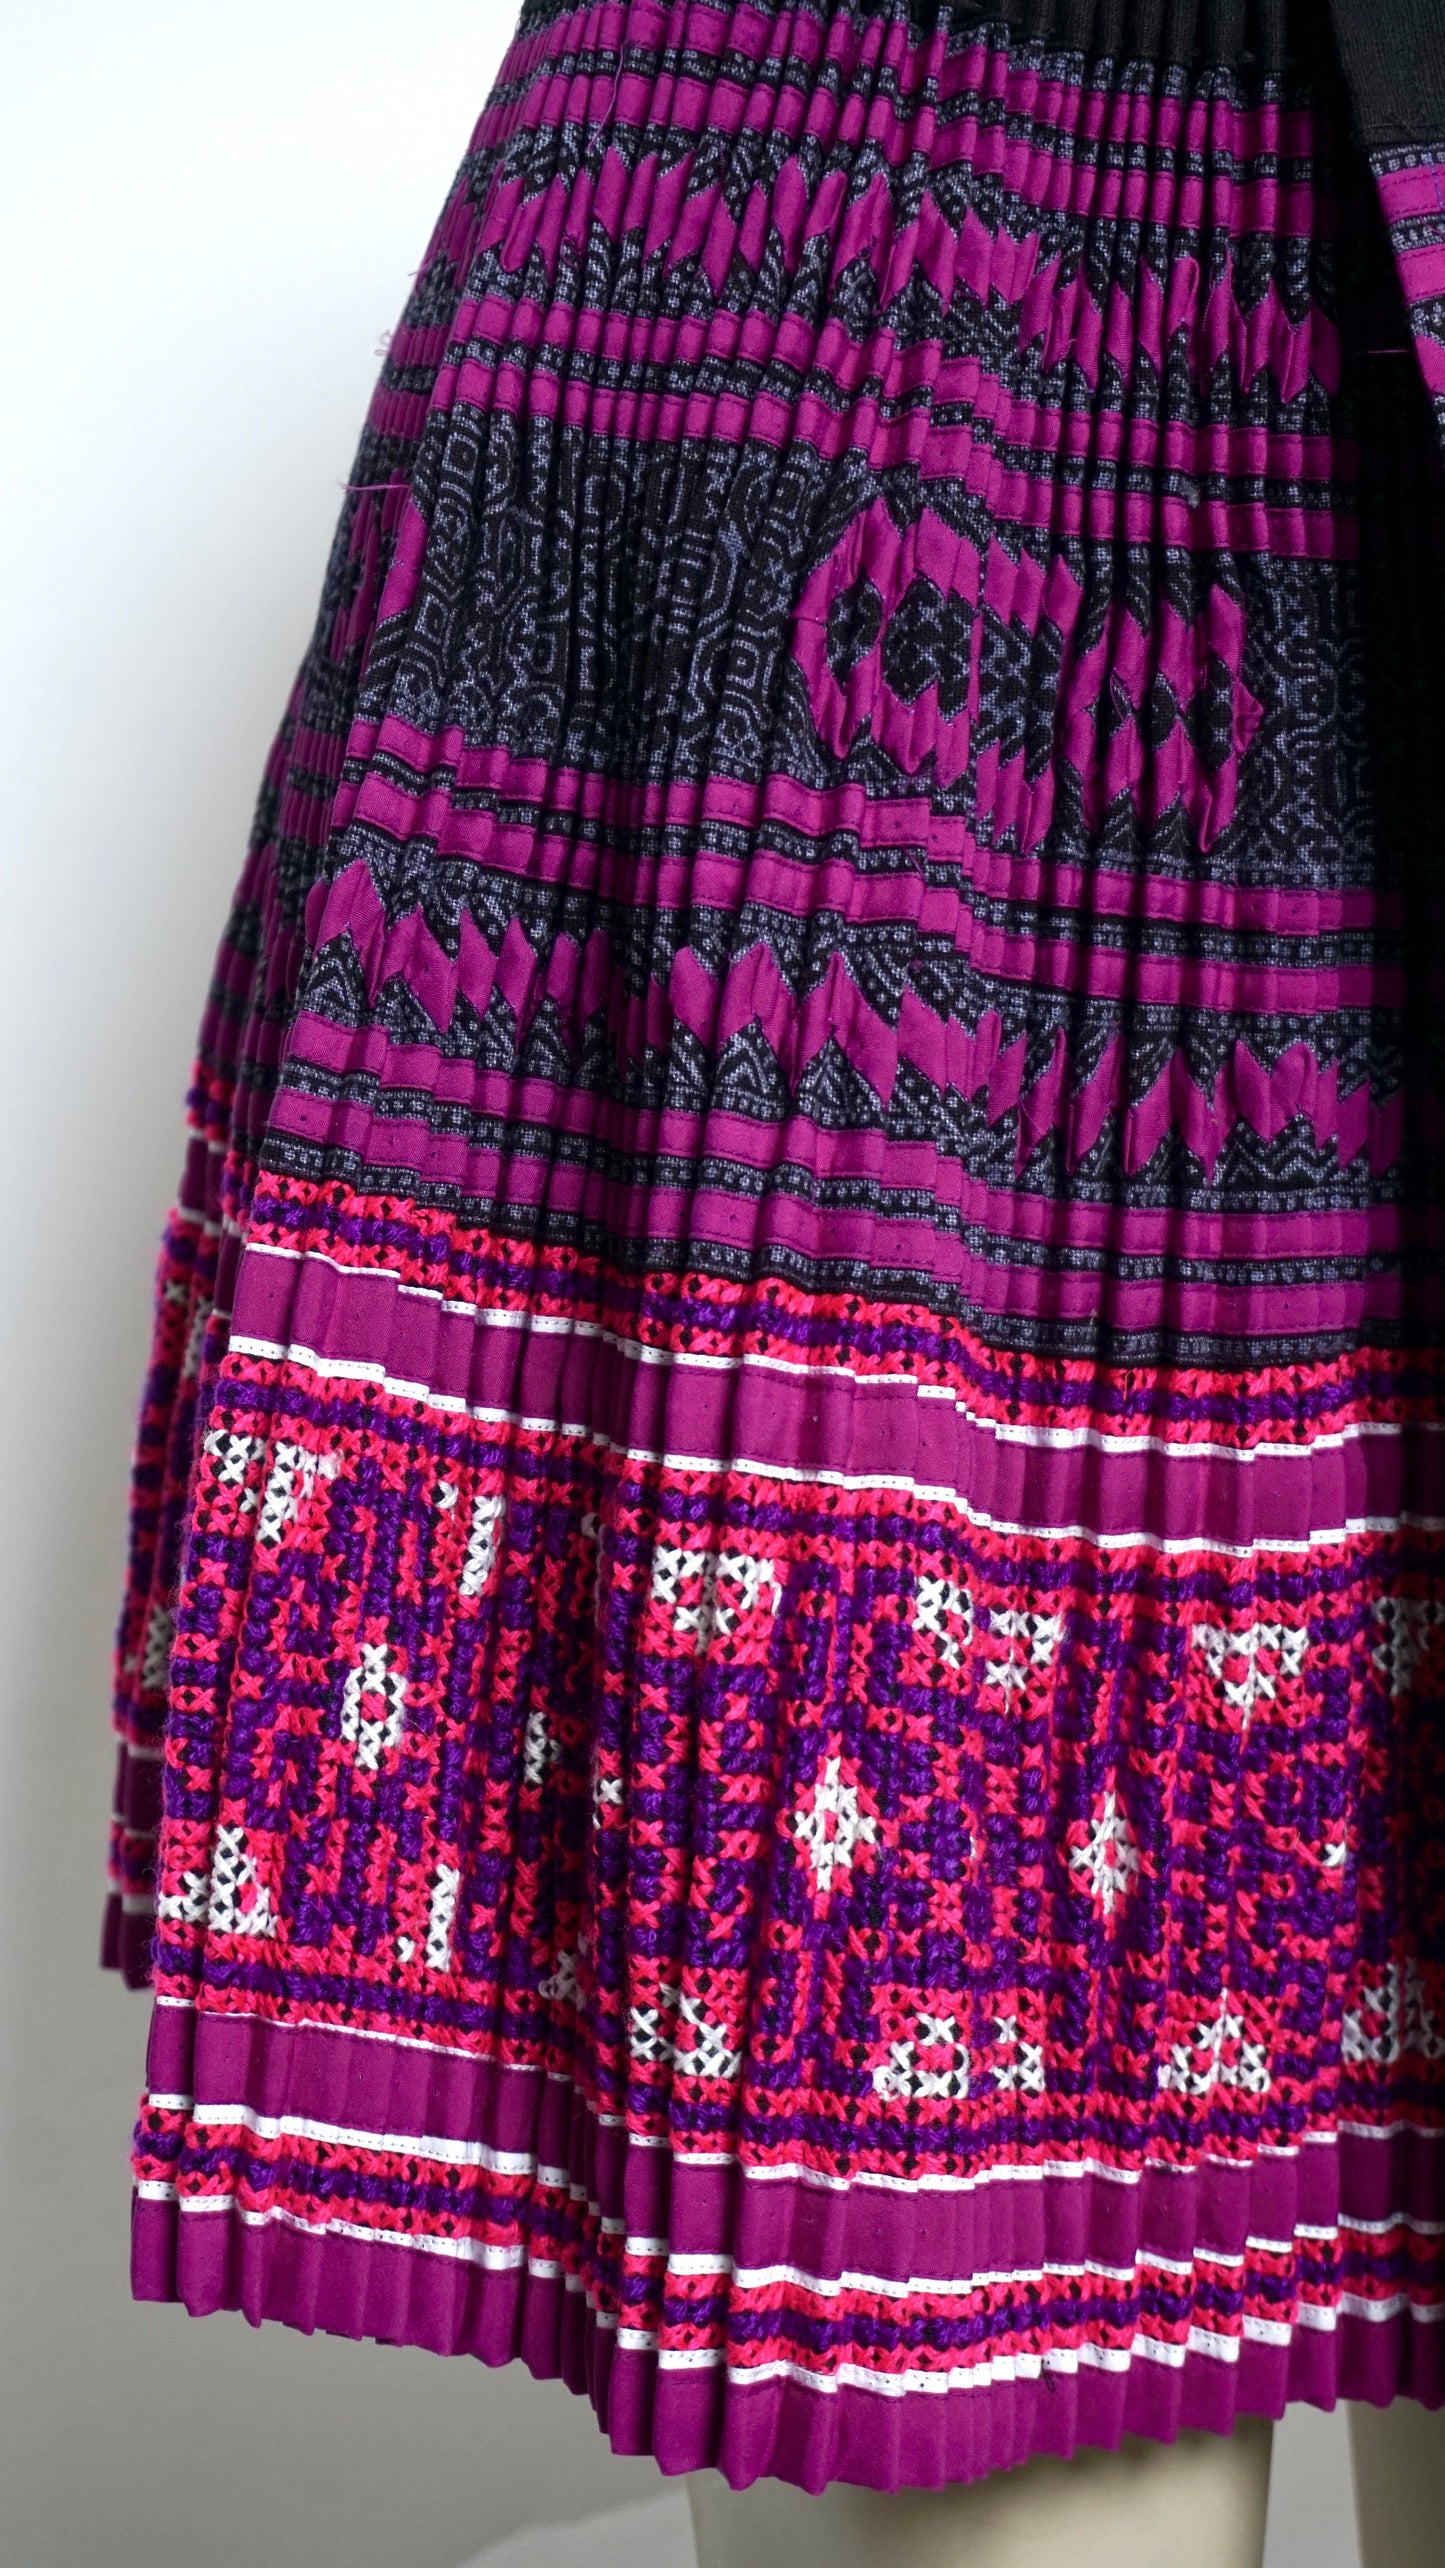 Hill Tribe Handmade Wrapped Skirt (40x20)